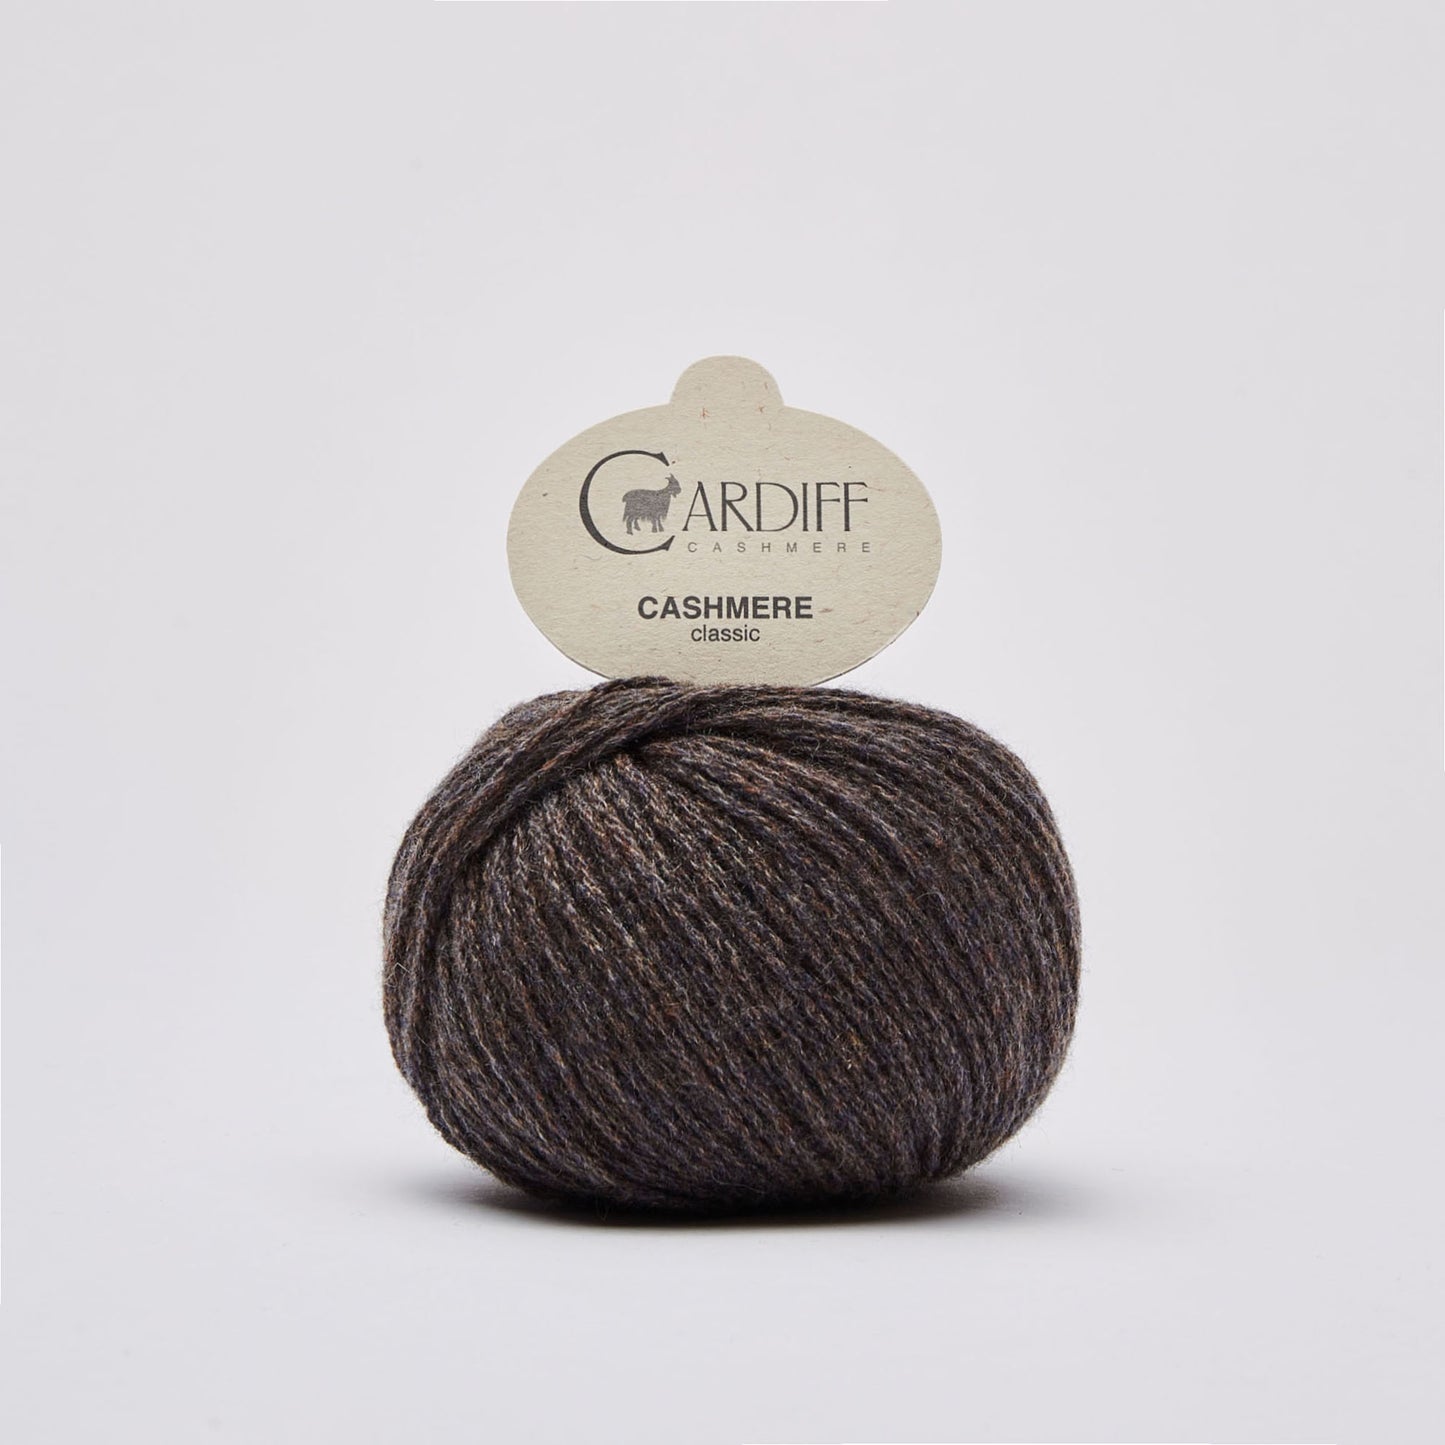 Cardiff CLASSIC gentle yarn, 676, ZIG ZAG, comp: 100% Cashmere